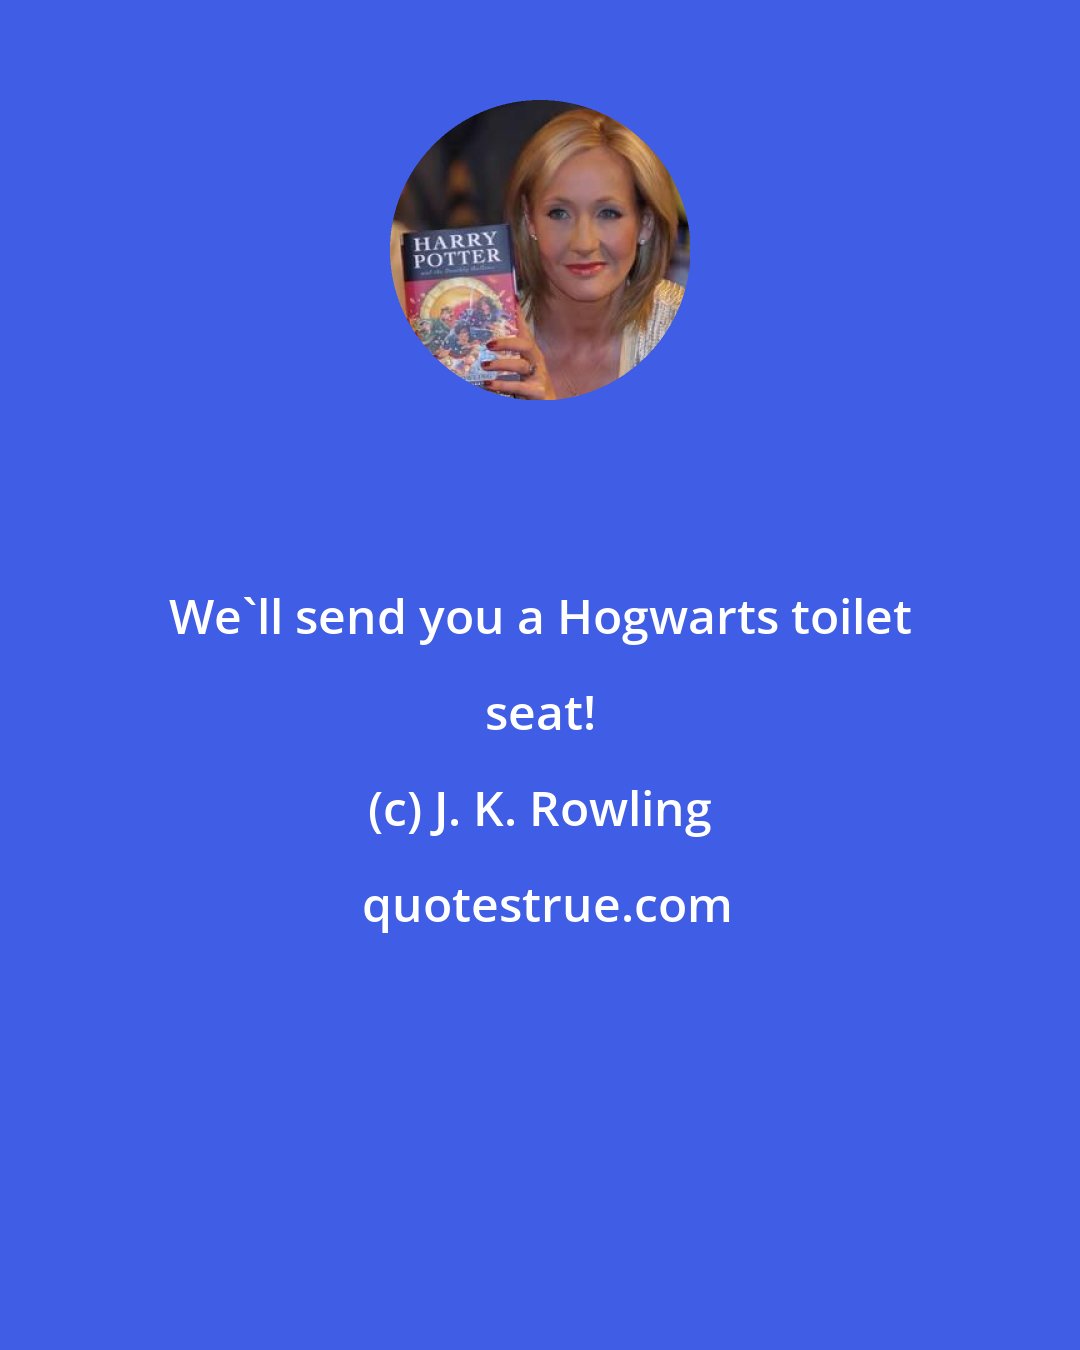 J. K. Rowling: We'll send you a Hogwarts toilet seat!